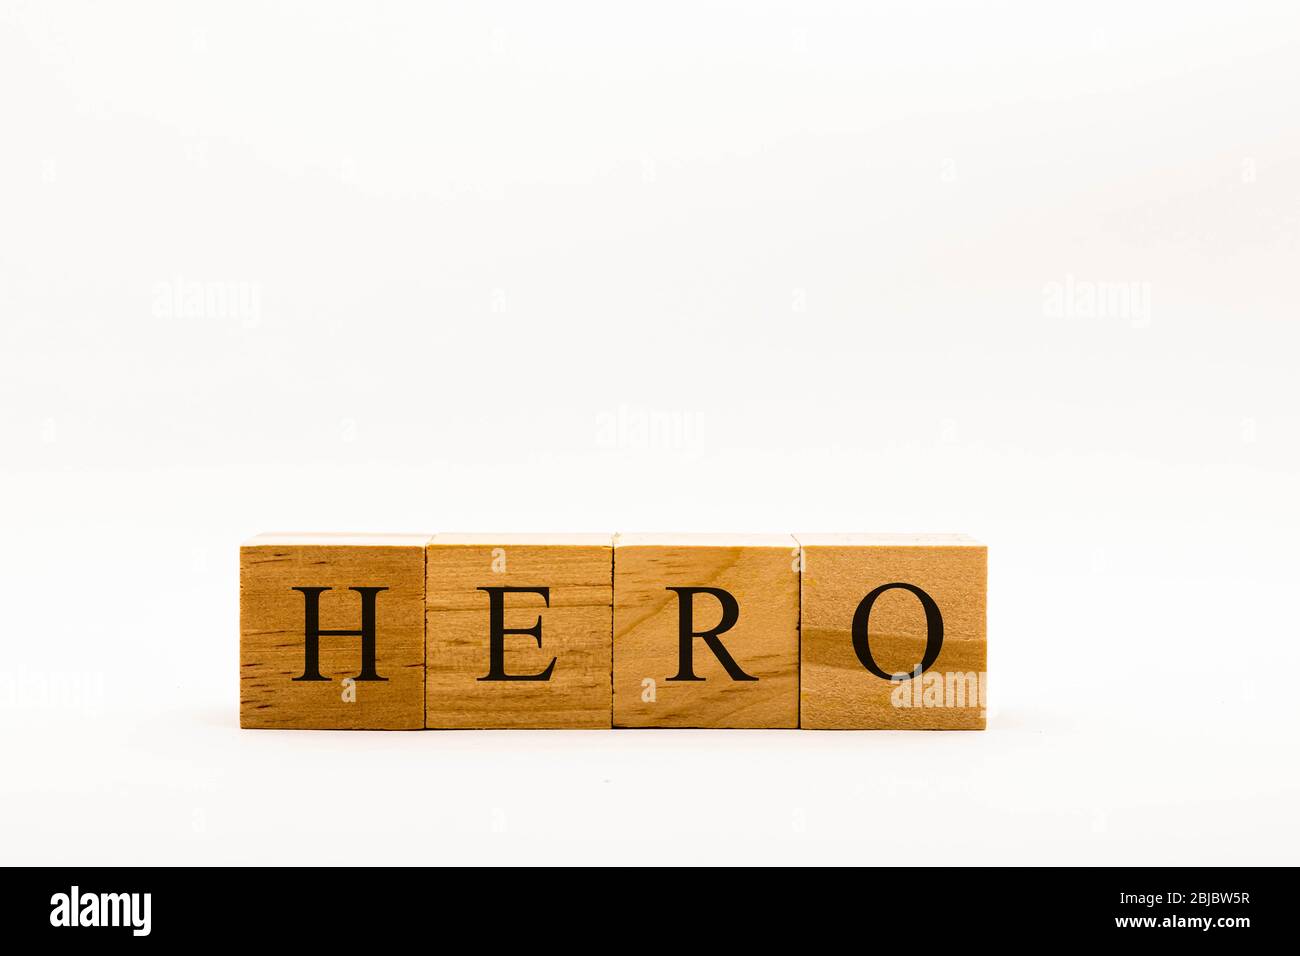 Coronavirus concept showing wooden blocks on a white background reading Hero Stock Photo